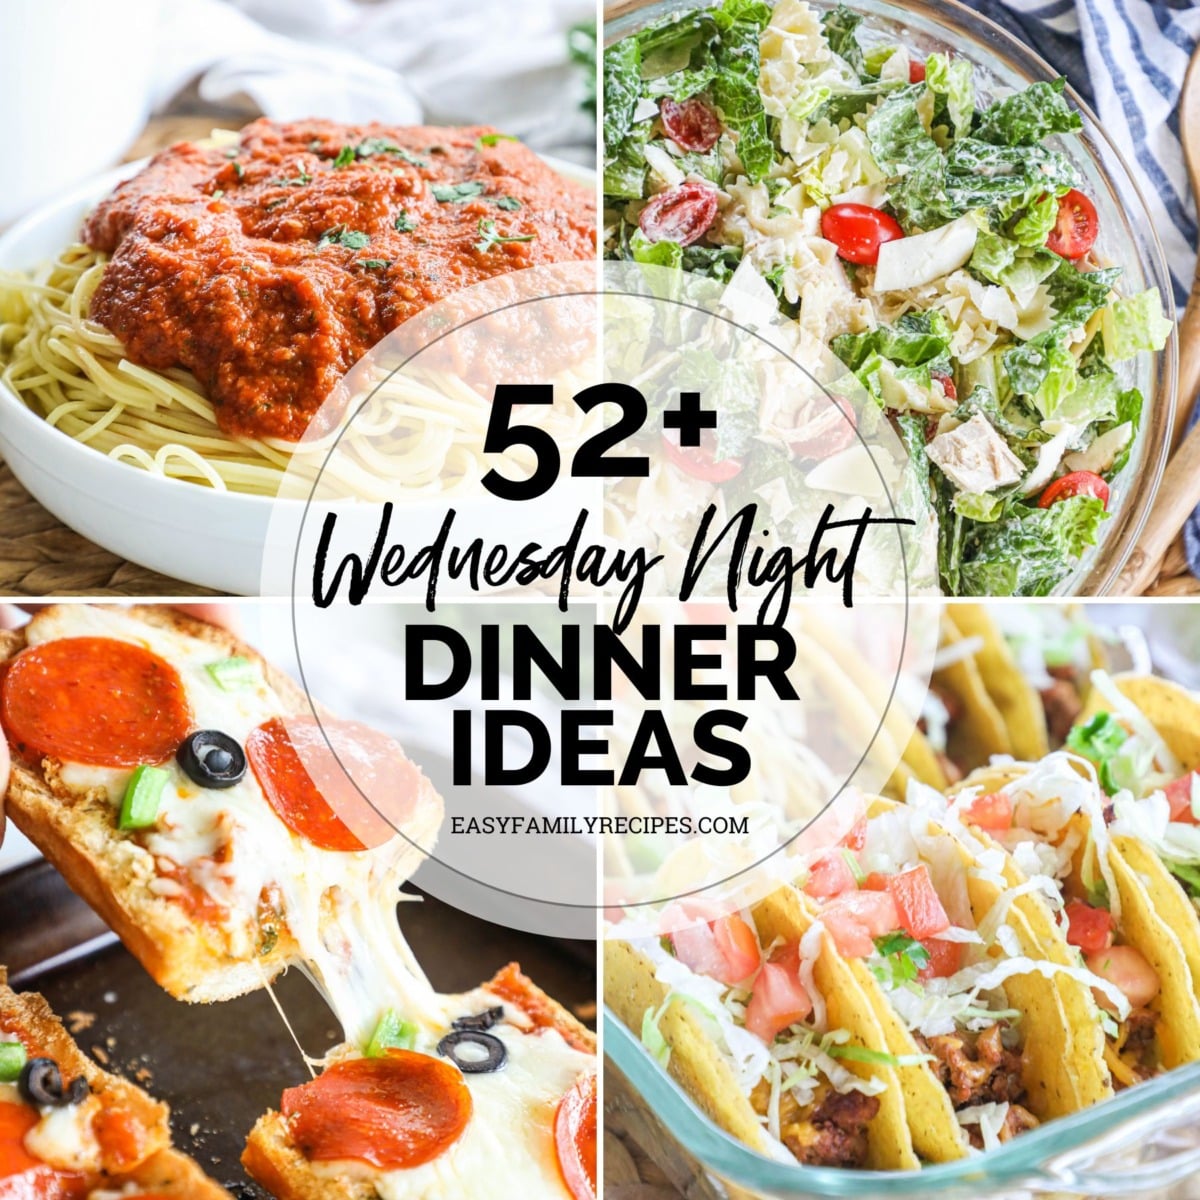 52+ Easy Wednesday Night Dinner Ideas